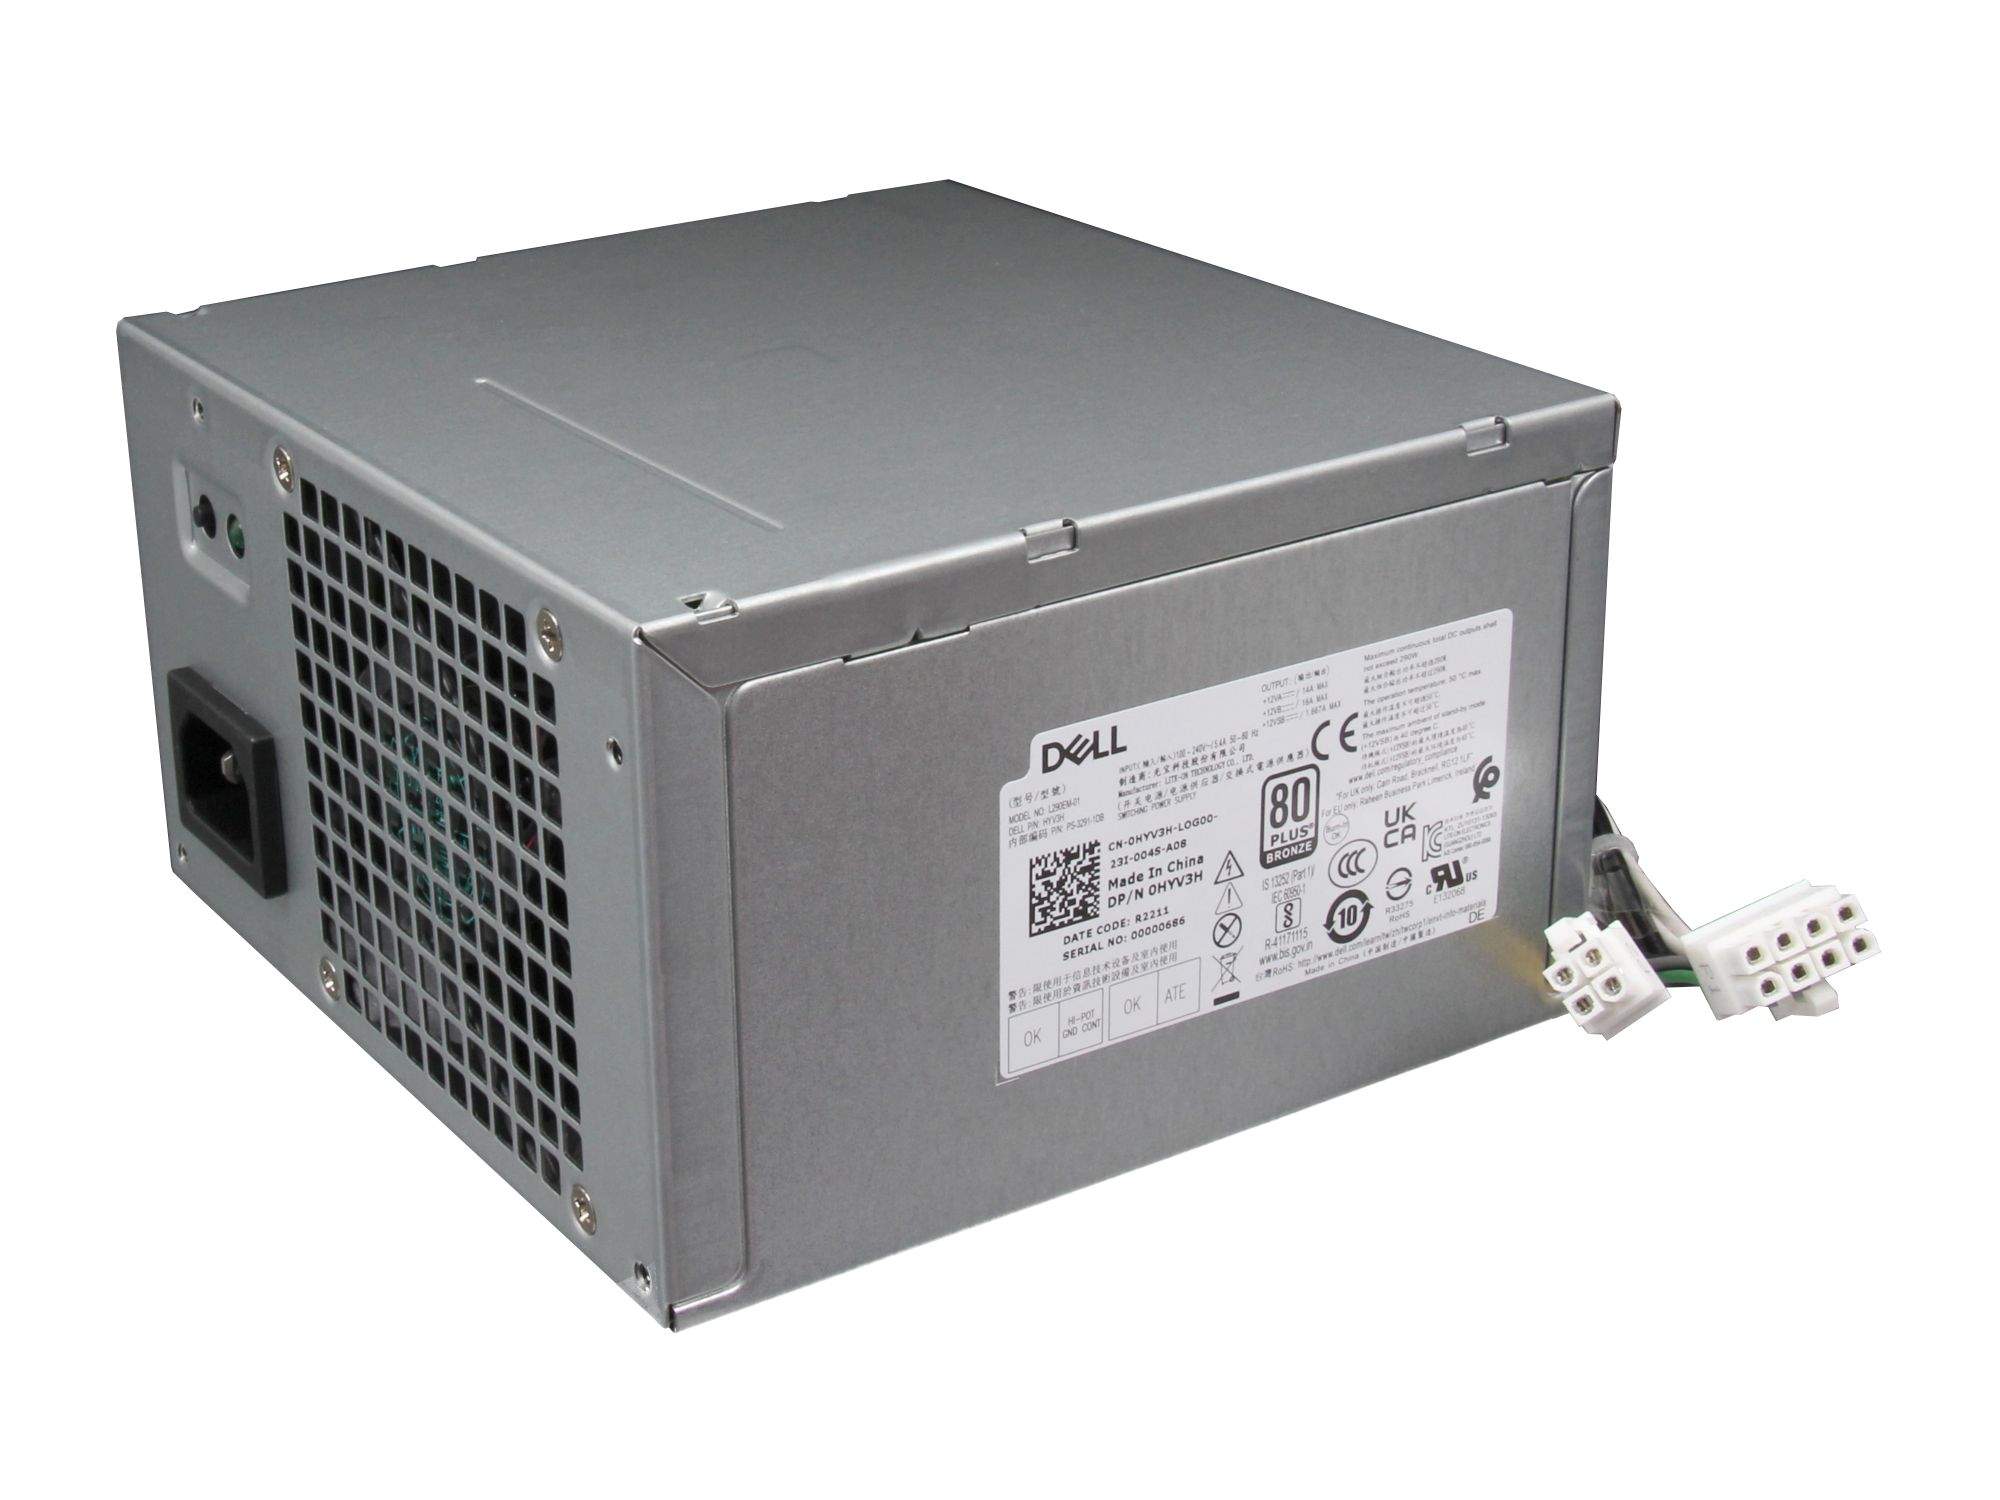 DELL L290EM-01 Desktop-PC Netzteil 290 Watt